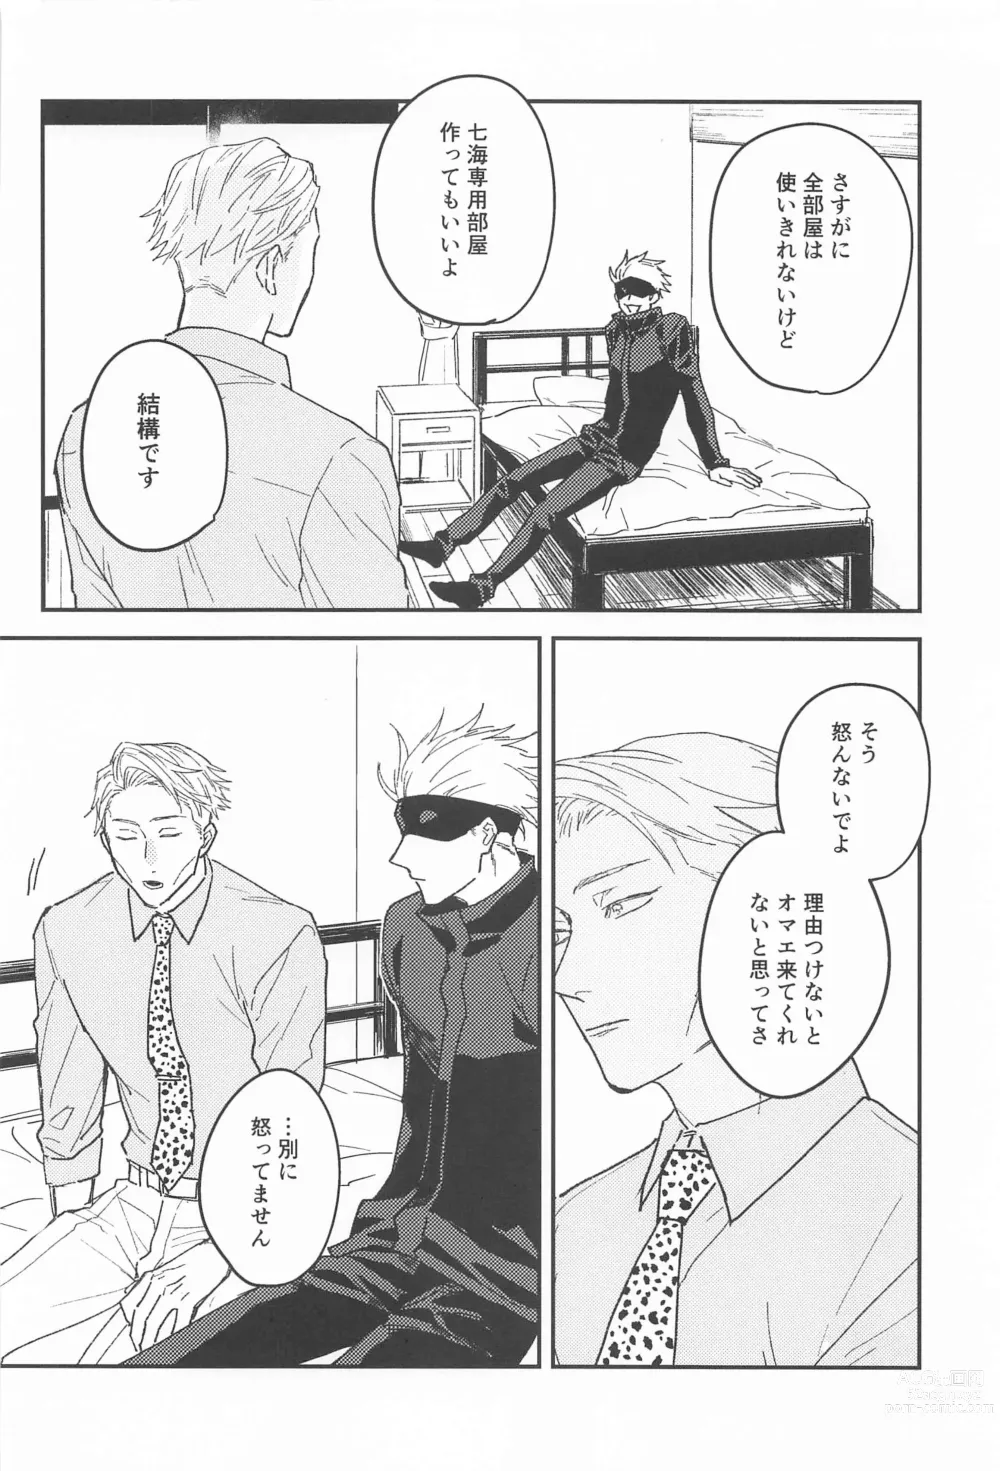 Page 7 of doujinshi 10years